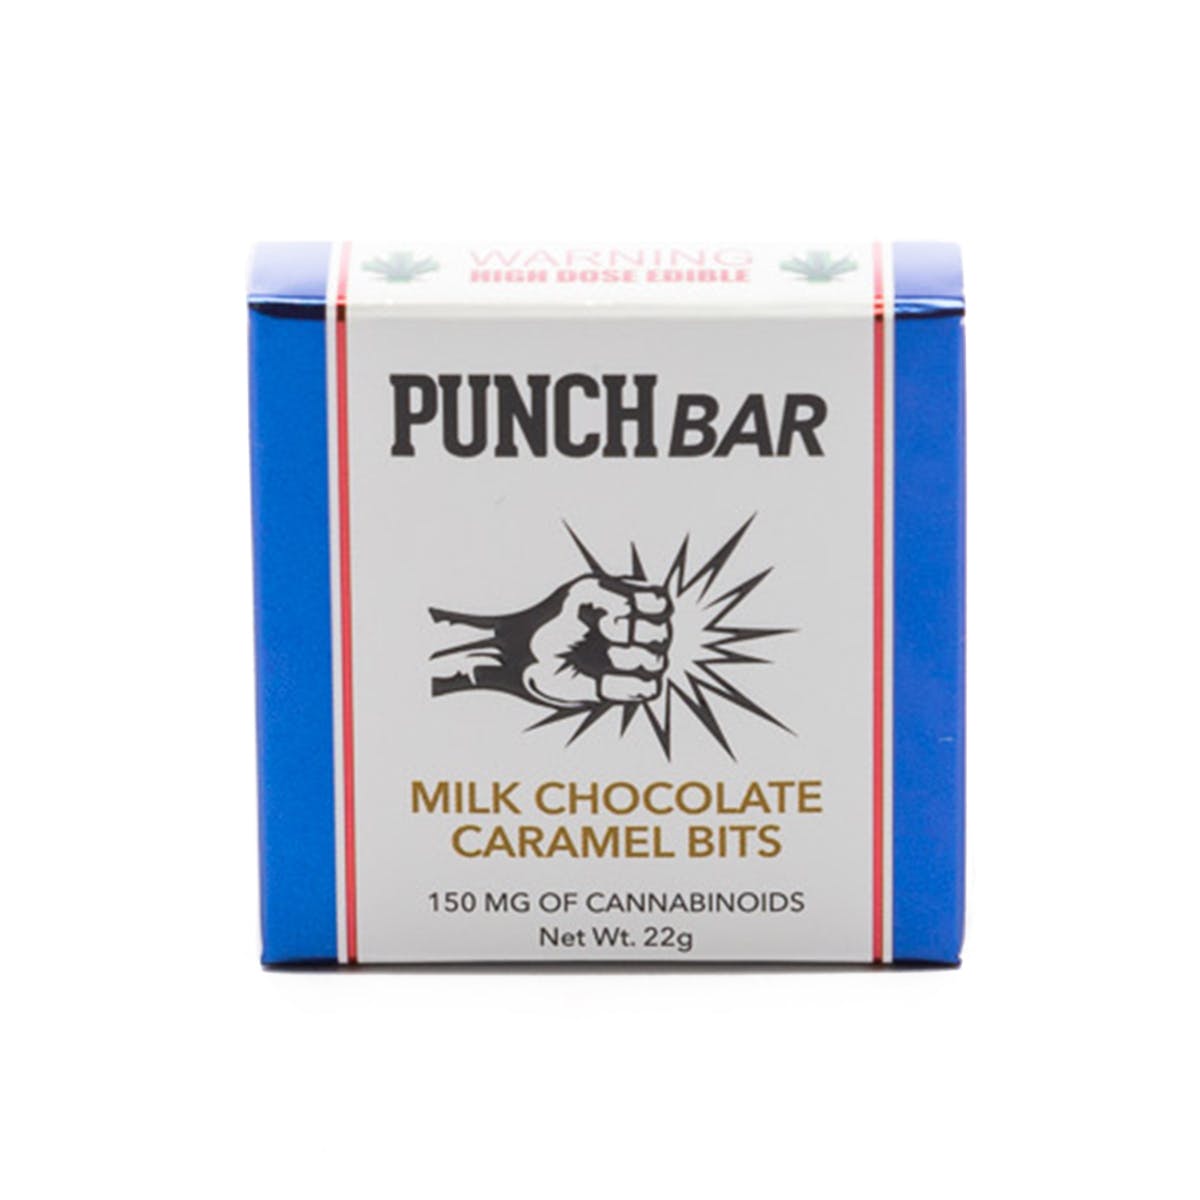 ORIGINAL - Milk Chocolate Caramel Bits 150mg